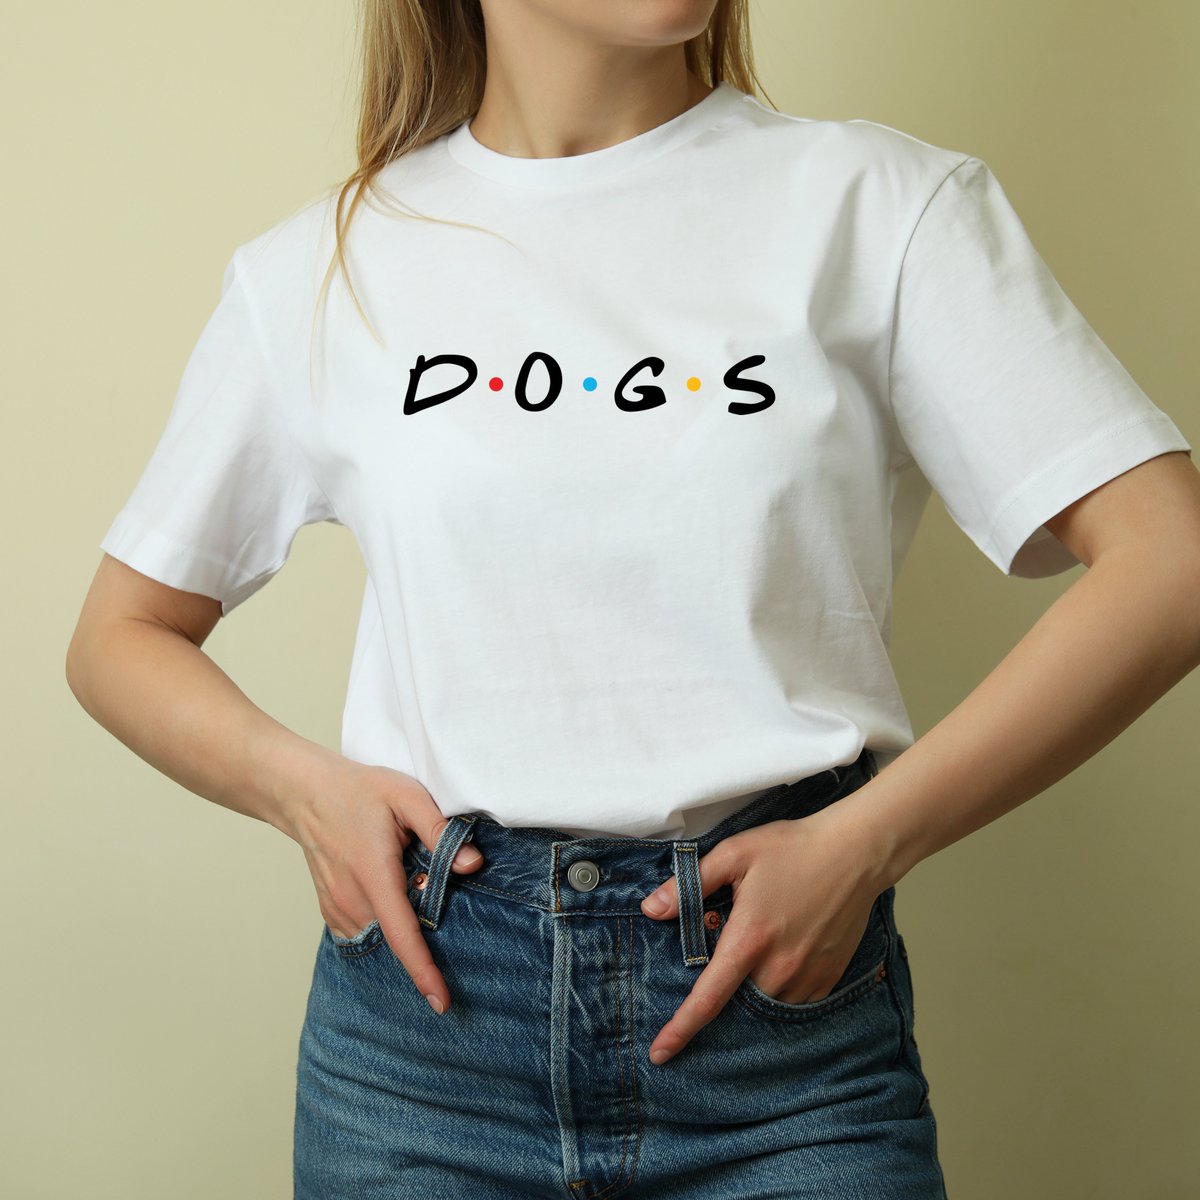 D.O.G.S dogs name minimalist shirt Unisex Heavy Cotton Tee etsy.me/3mdLb0O
#minimalist #dogsshirtname #minimalistdogshirt #doglovershirt #minimalistshirt #dogsdesignshirt #cottonshirt #animalloversshirt #trendyshirts #DOGE  #Dogecoin